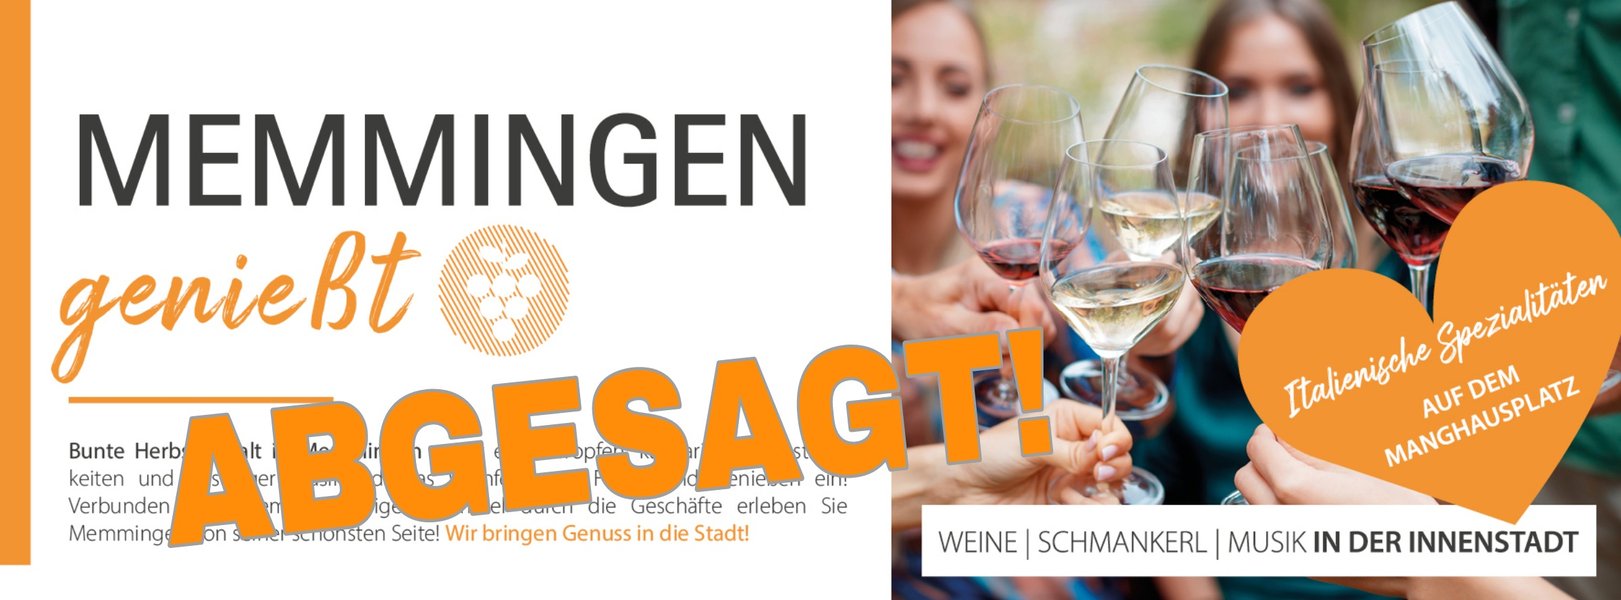 Absage Memminger Weinfest_Kopfgrafik.jpg